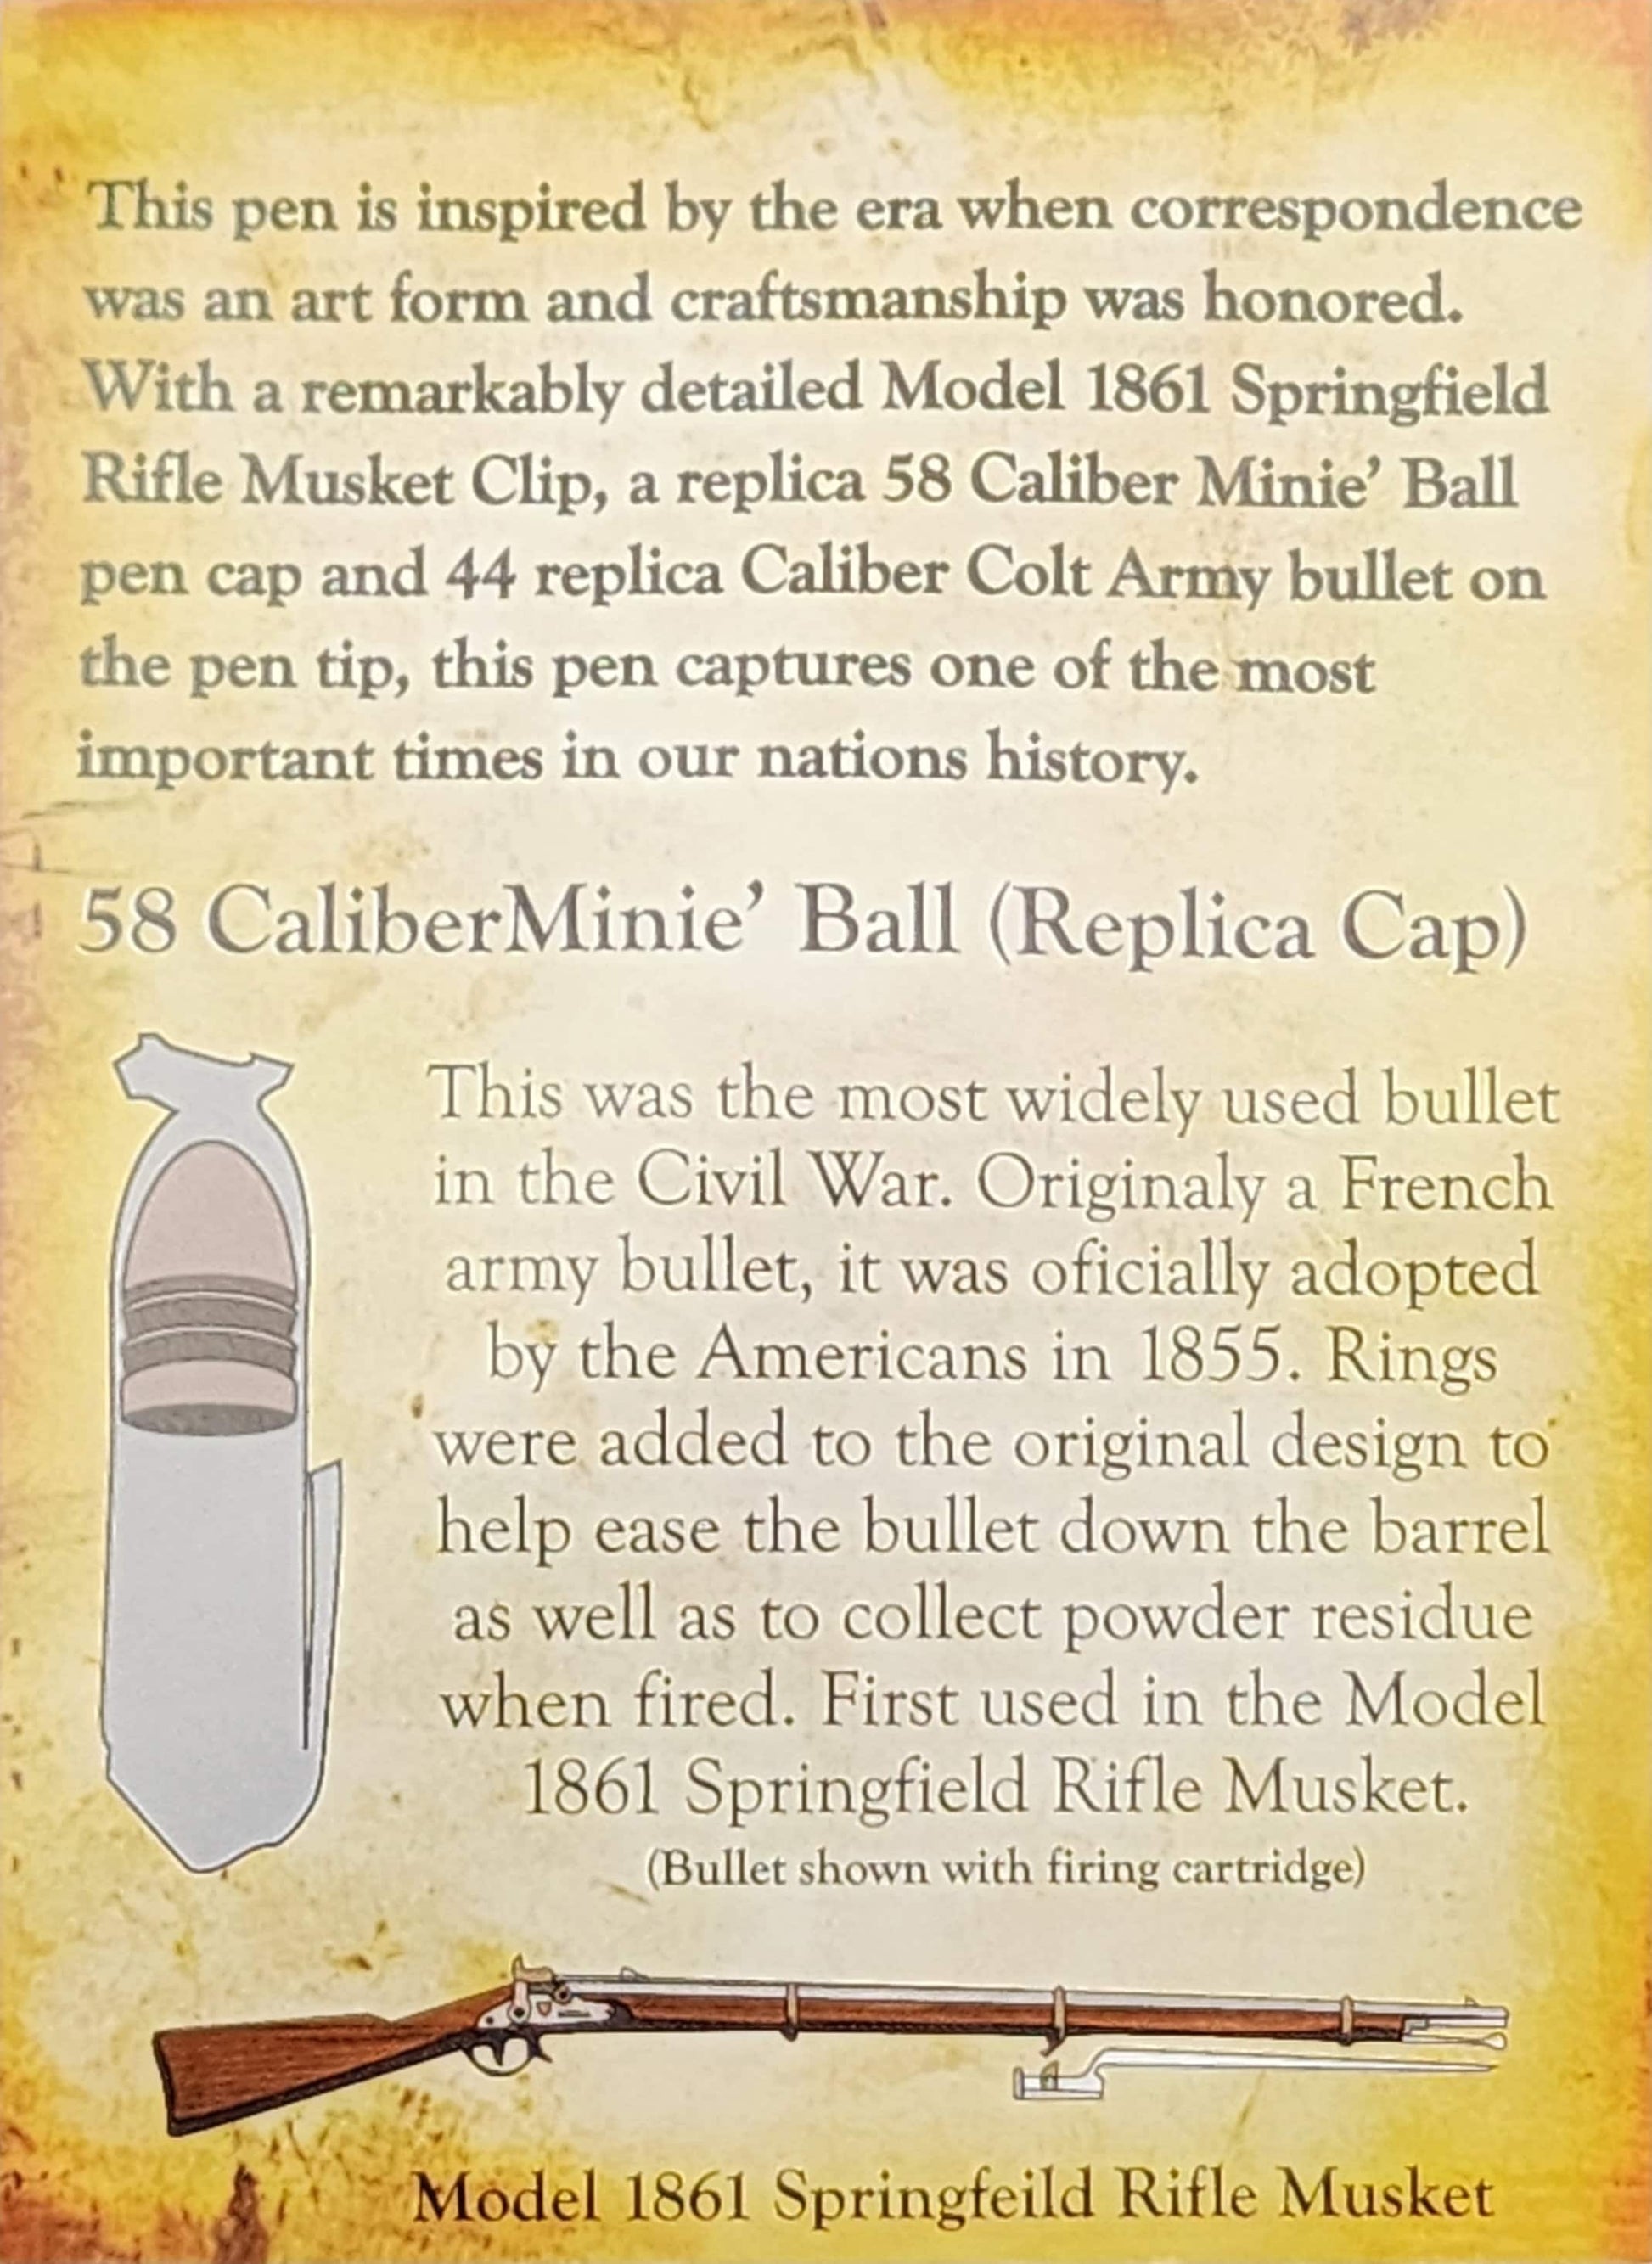 Civil War Twist Pen | Model 1861 Springfield | 58 Caliber Minie Ball | 44 Caliber 1860 Colt Army Revolver Bullet | Handcrafted Pen